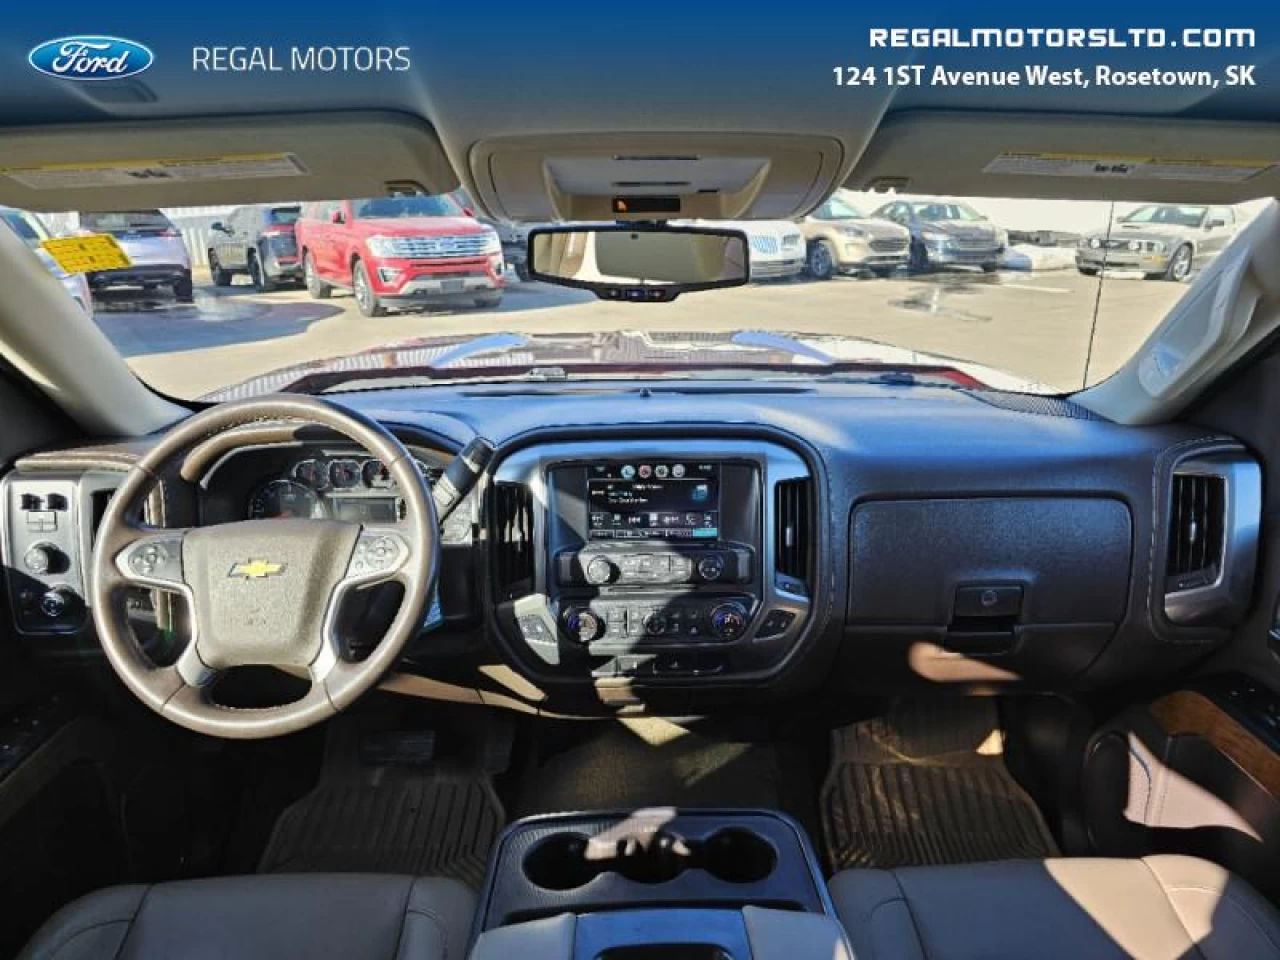 2016 Chevrolet Silverado 1500 LTZ 4X4 Main Image